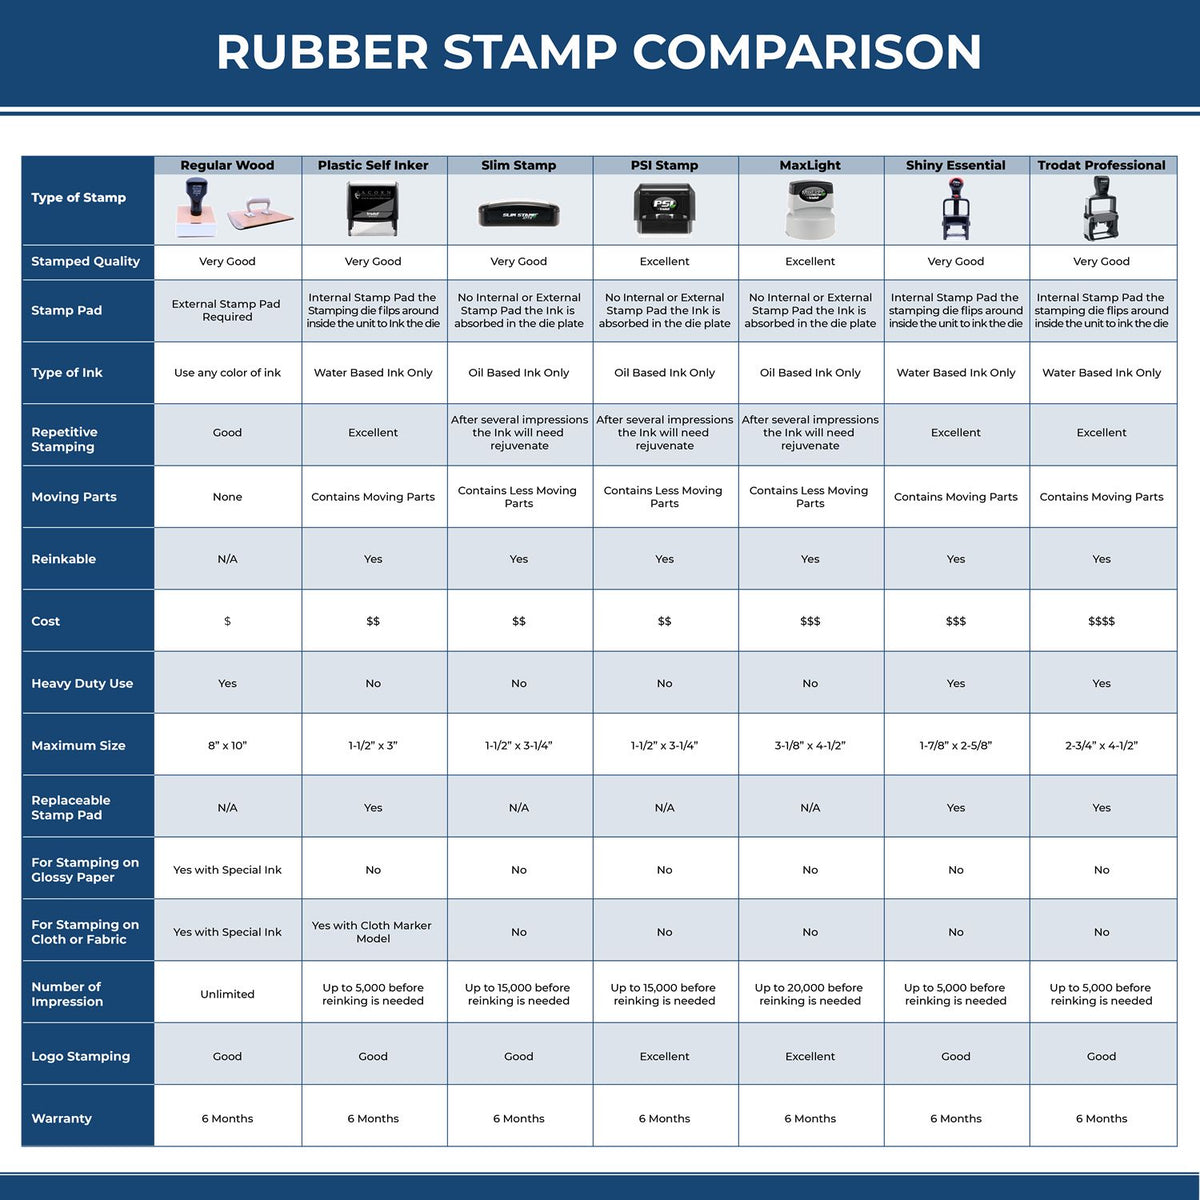 Large Make Up Work Rubber Stamp 4679R Rubber Stamp Comparison